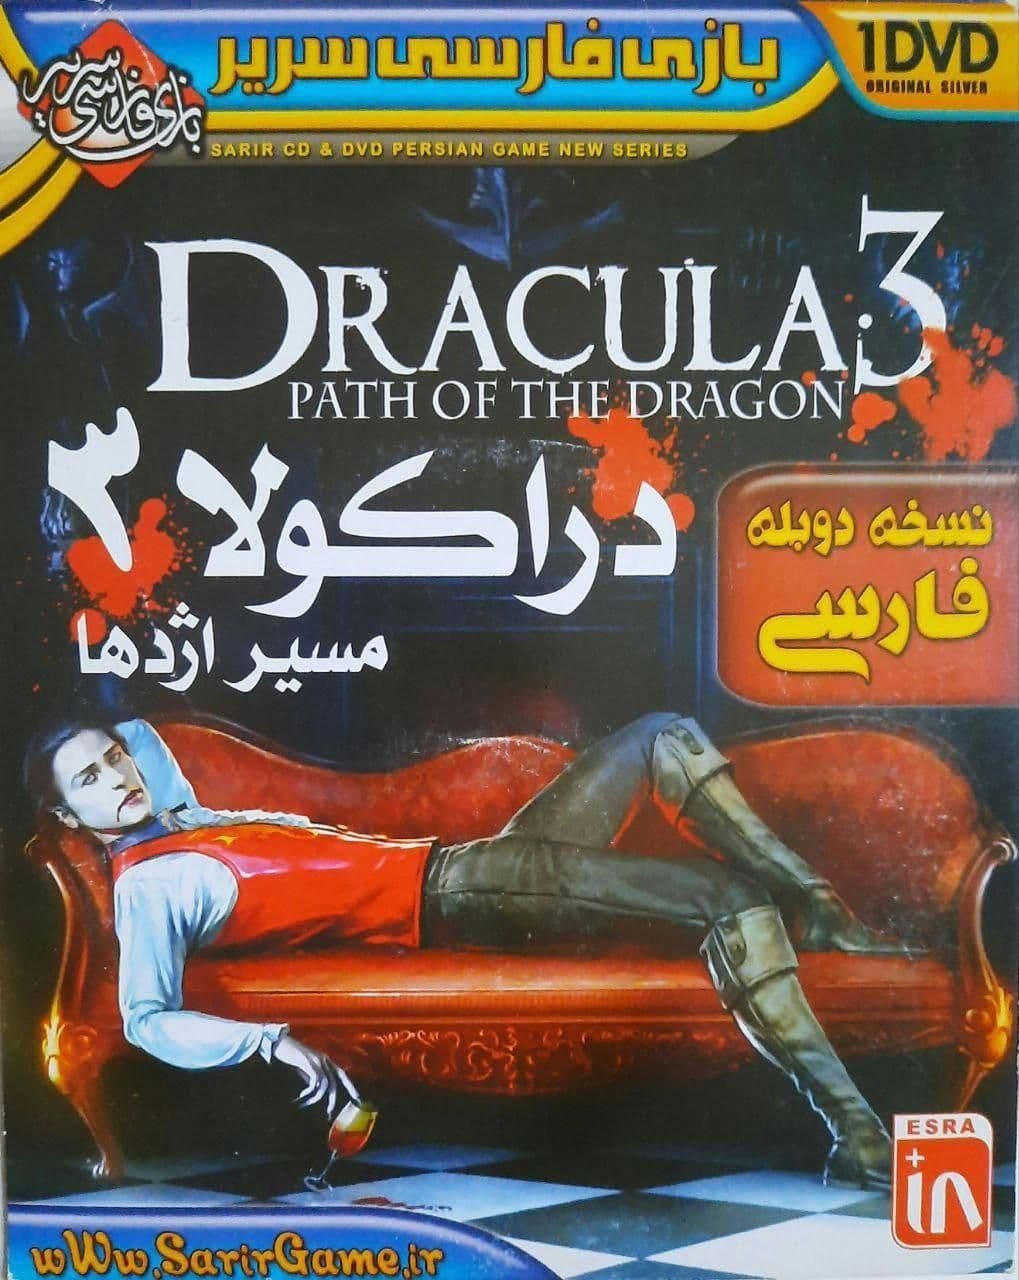 You are currently viewing دانلود بازی دراکولا ۳ دوبله فارسی مسیر اژدها Dracula path of Dragon برای کامپیوتر با لینک مستقیم